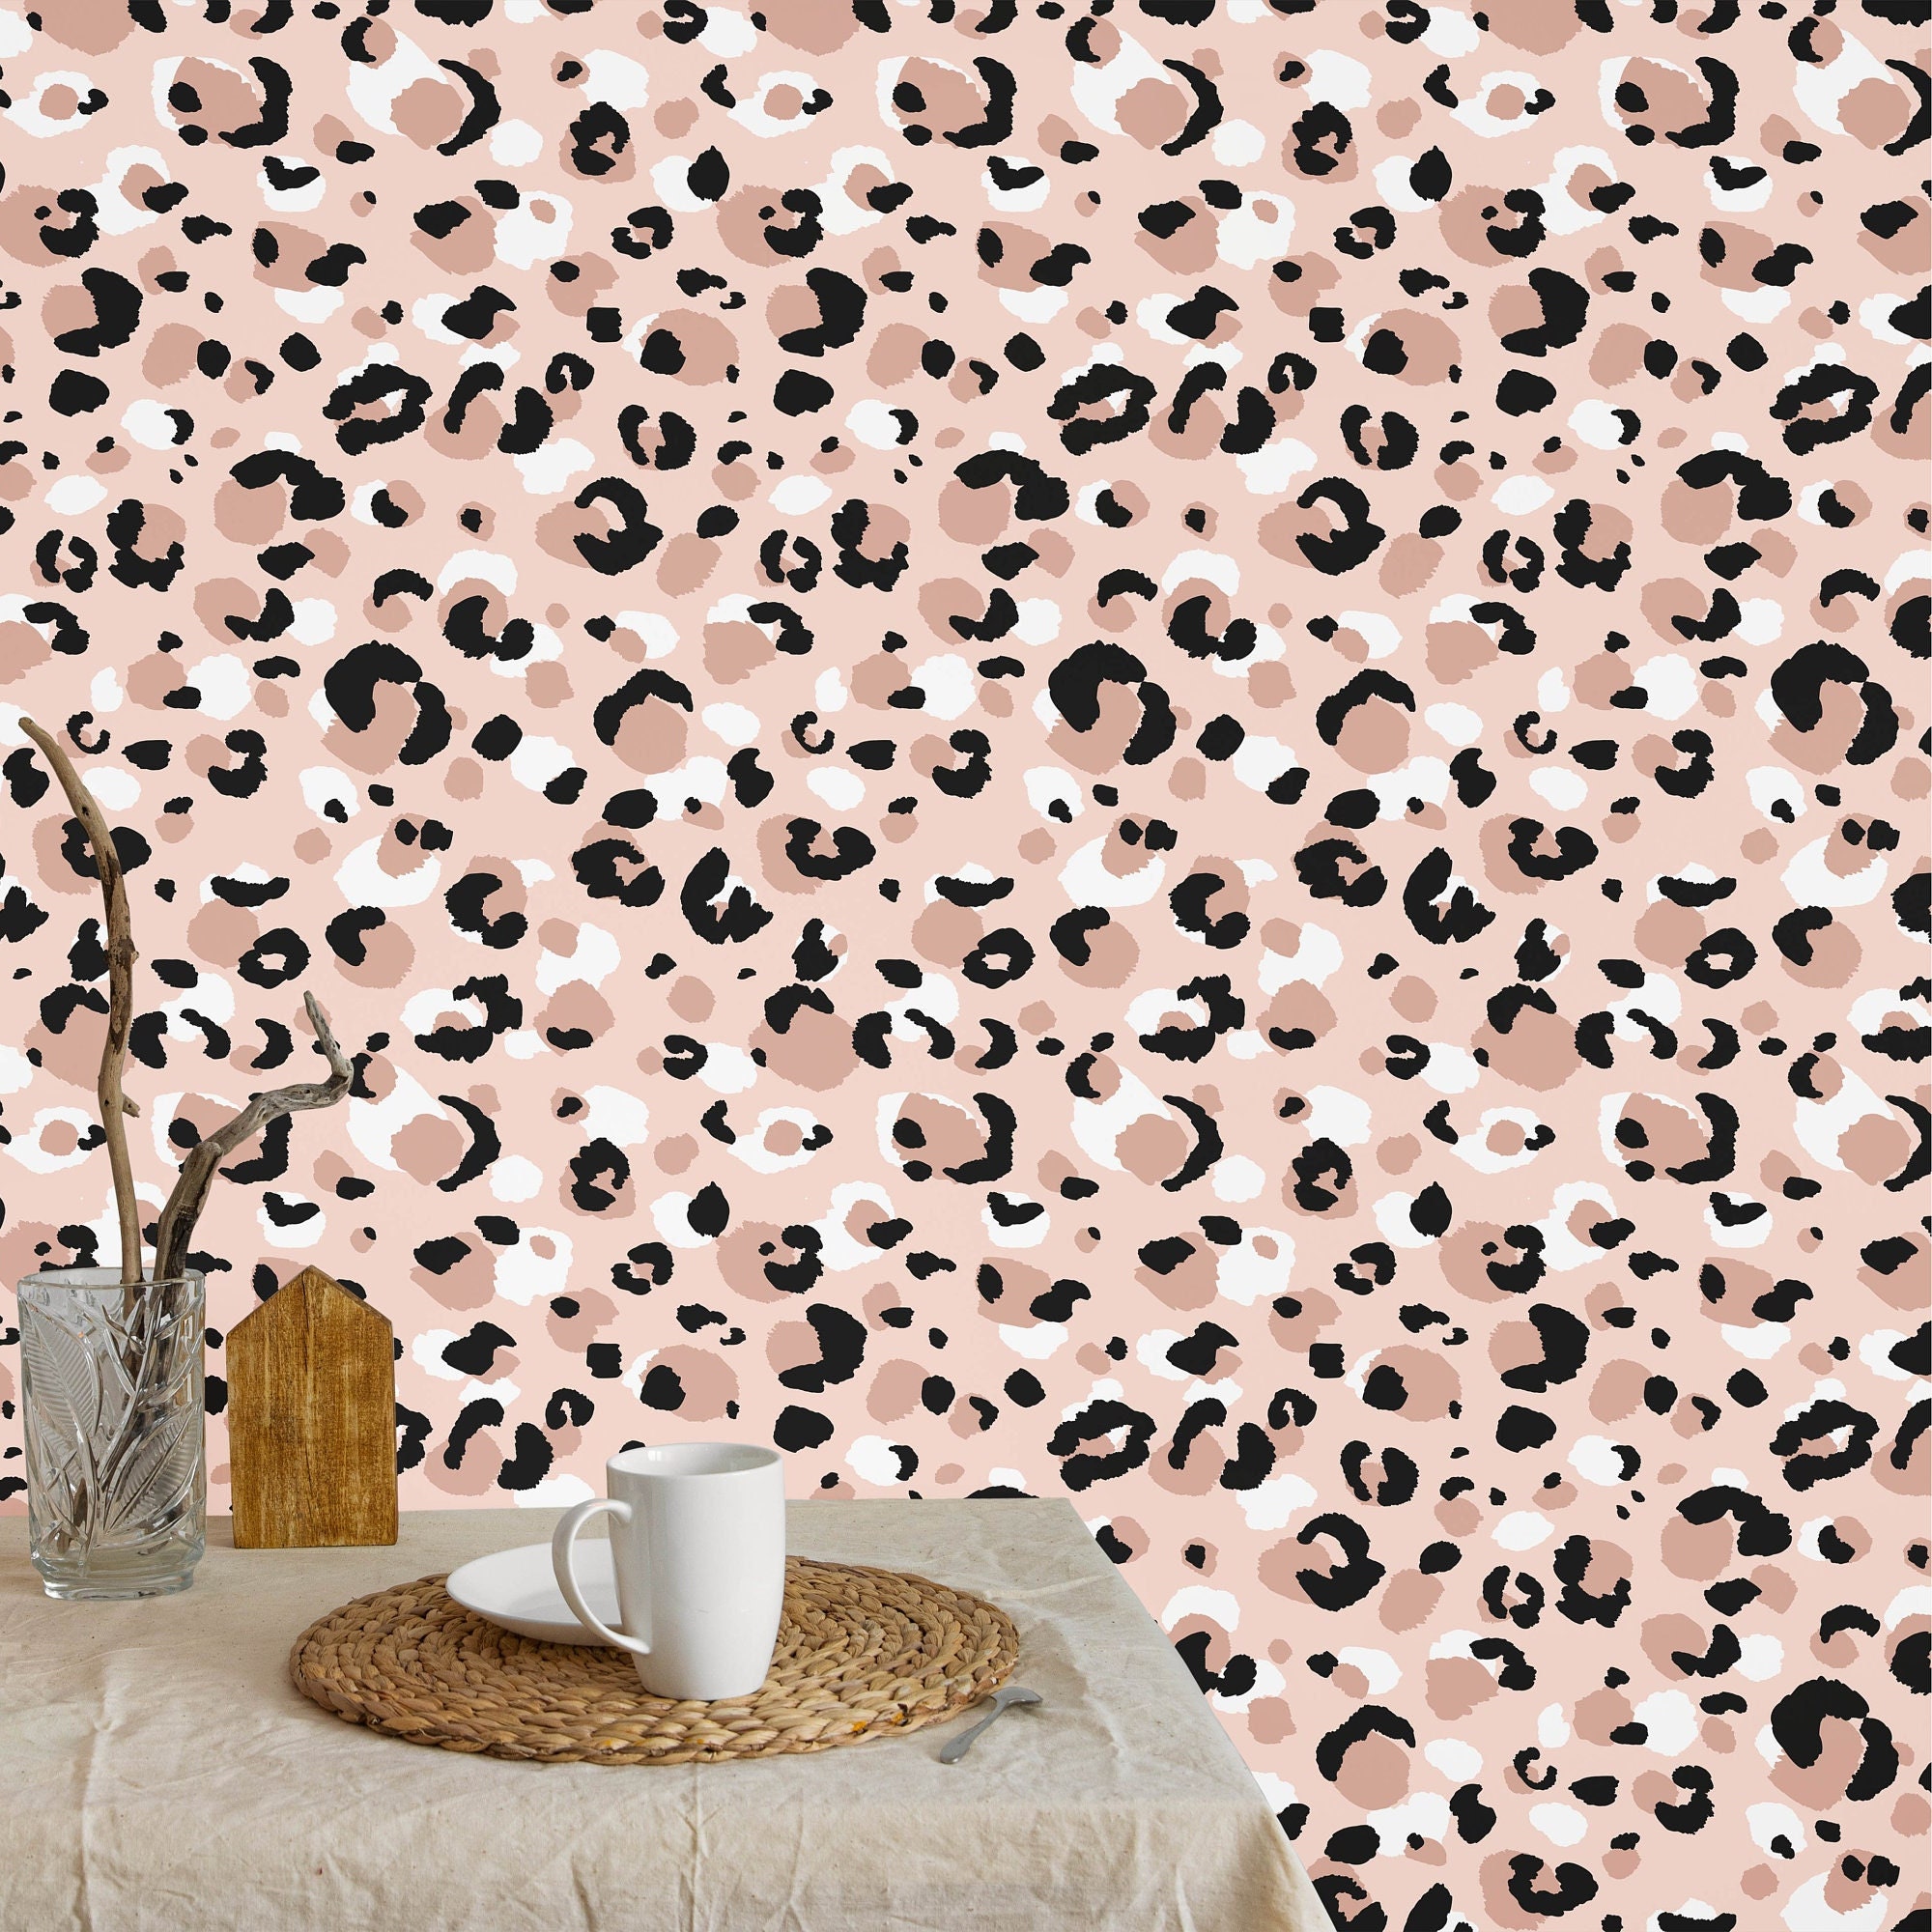 Peel & Stick Wallpaper Swatch - Blush Leopard Print Pink Skin Jaguar Cheetah  Custom Removable Wallpaper by Spoonflower 